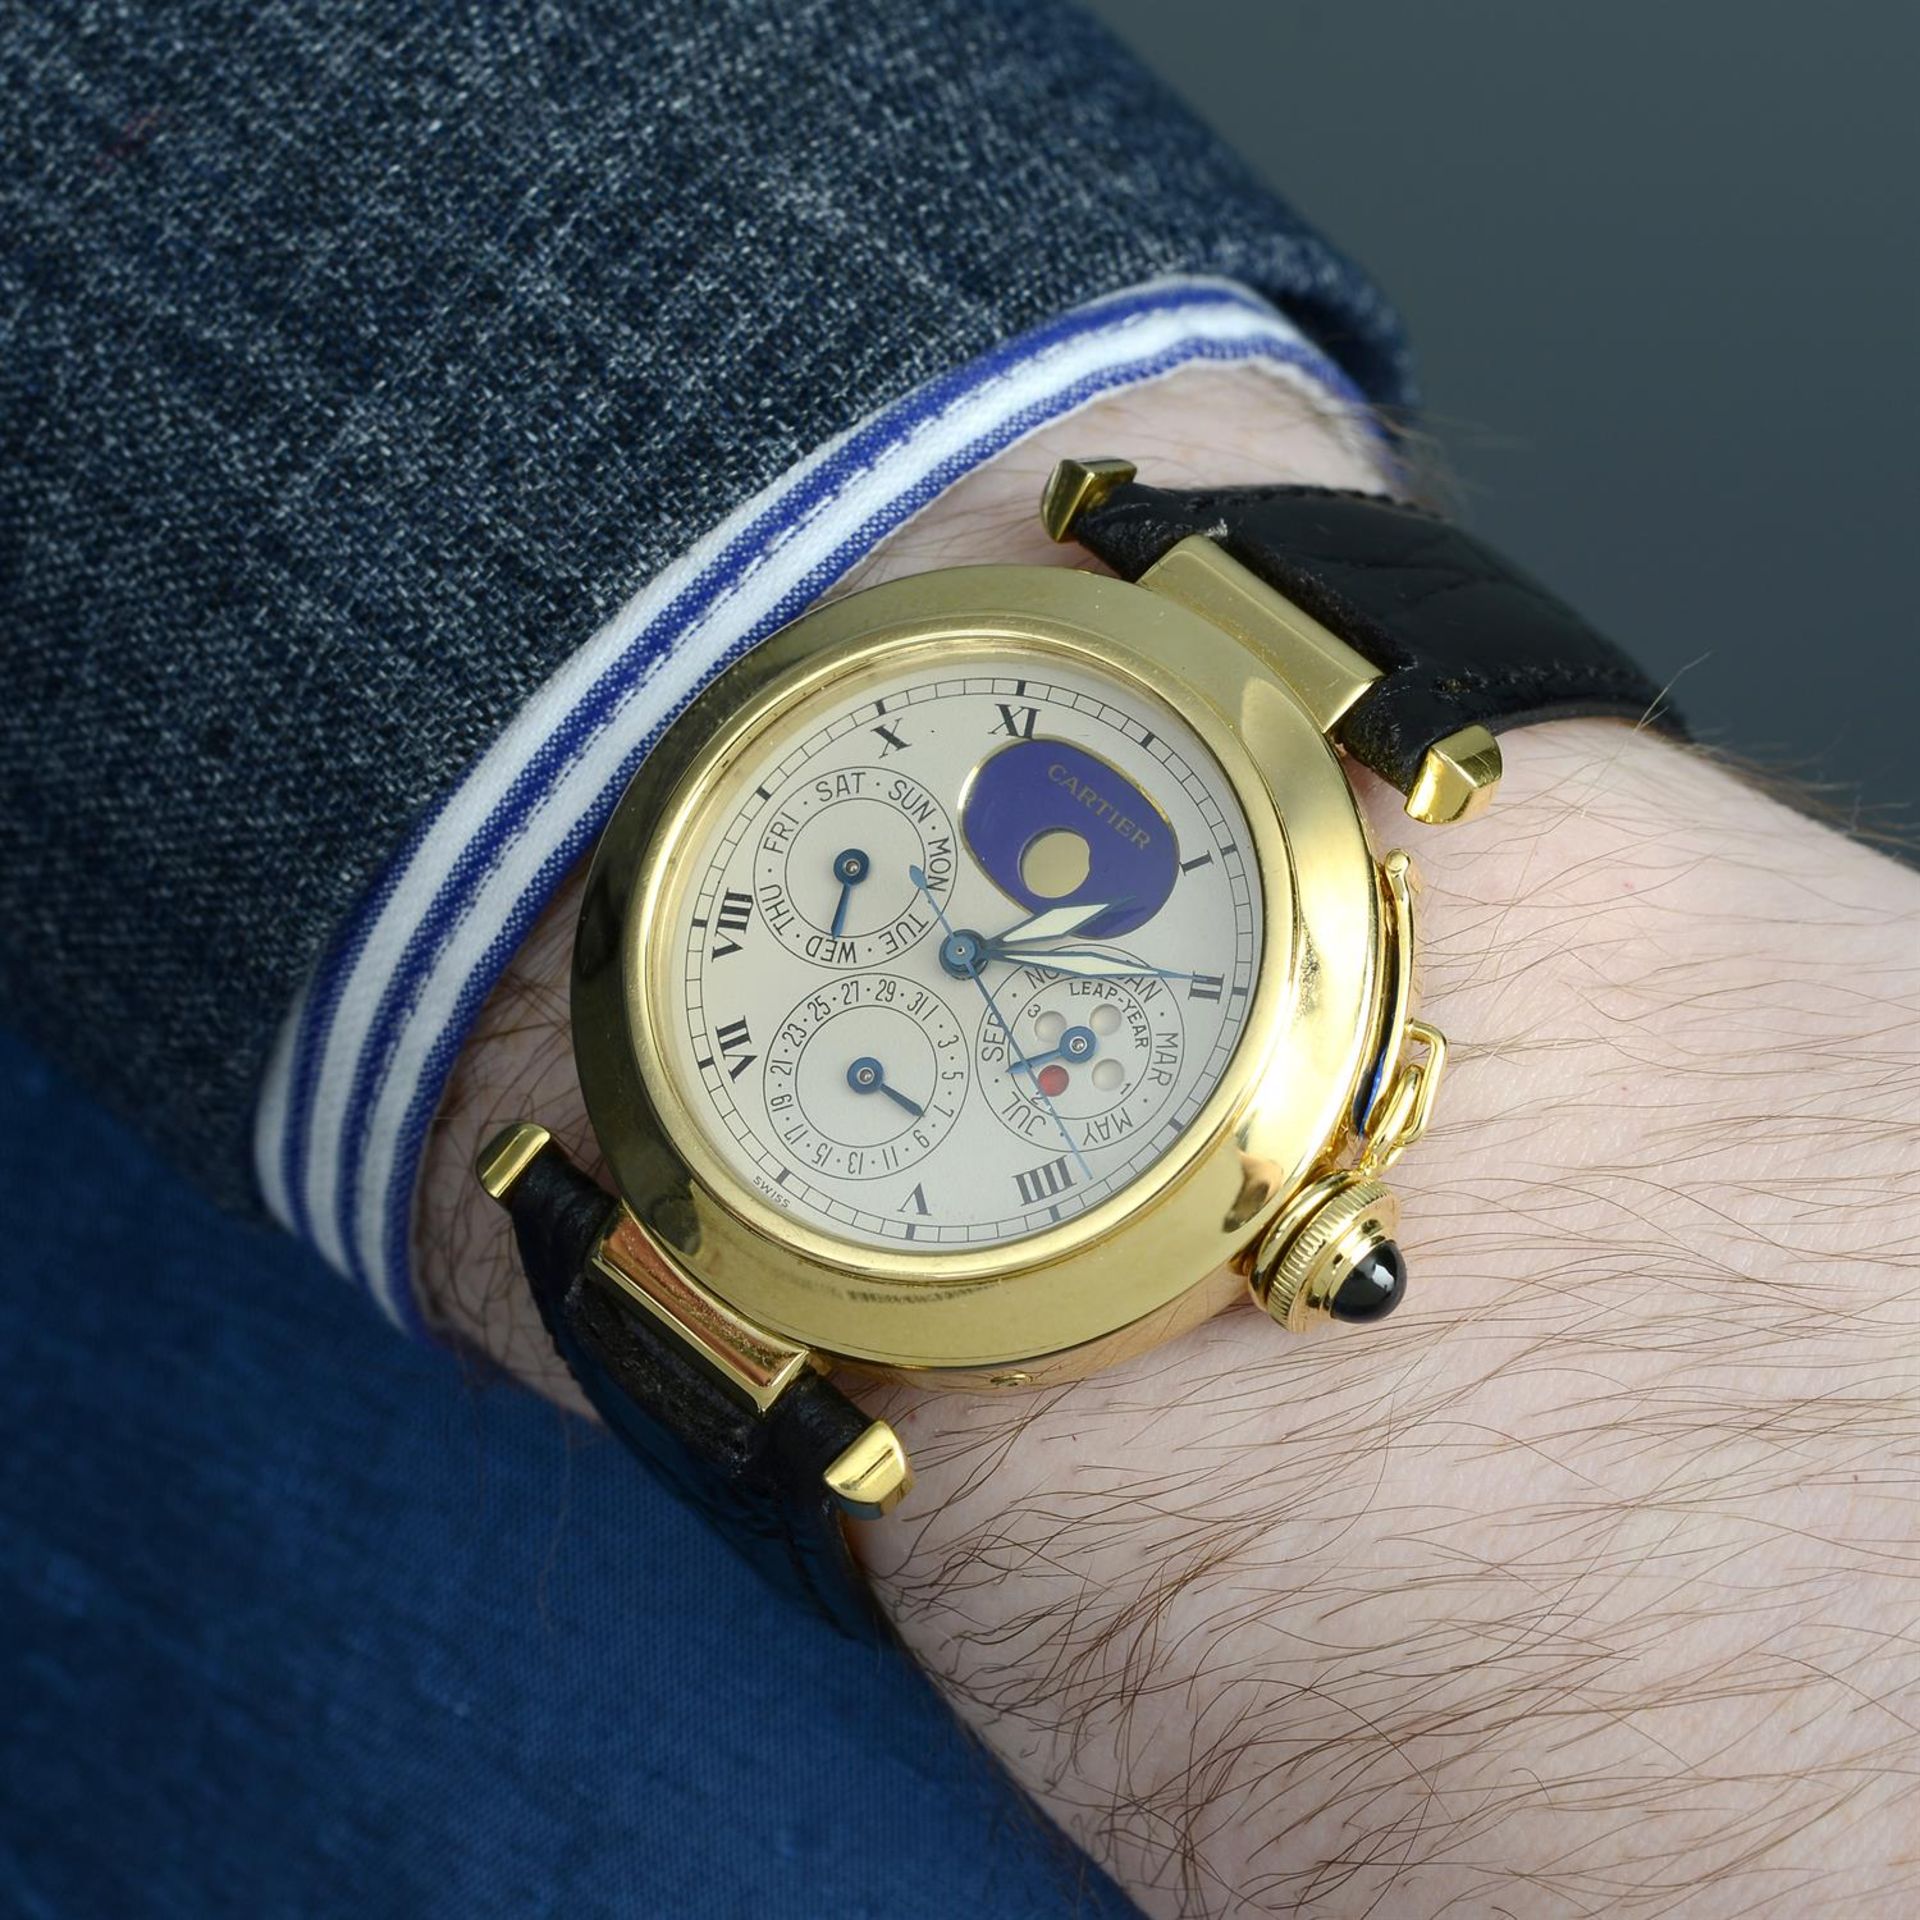 CARTIER - an 18ct yellow gold Pasha Perpetual Calendar wrist watch, 38mm. - Image 5 of 5